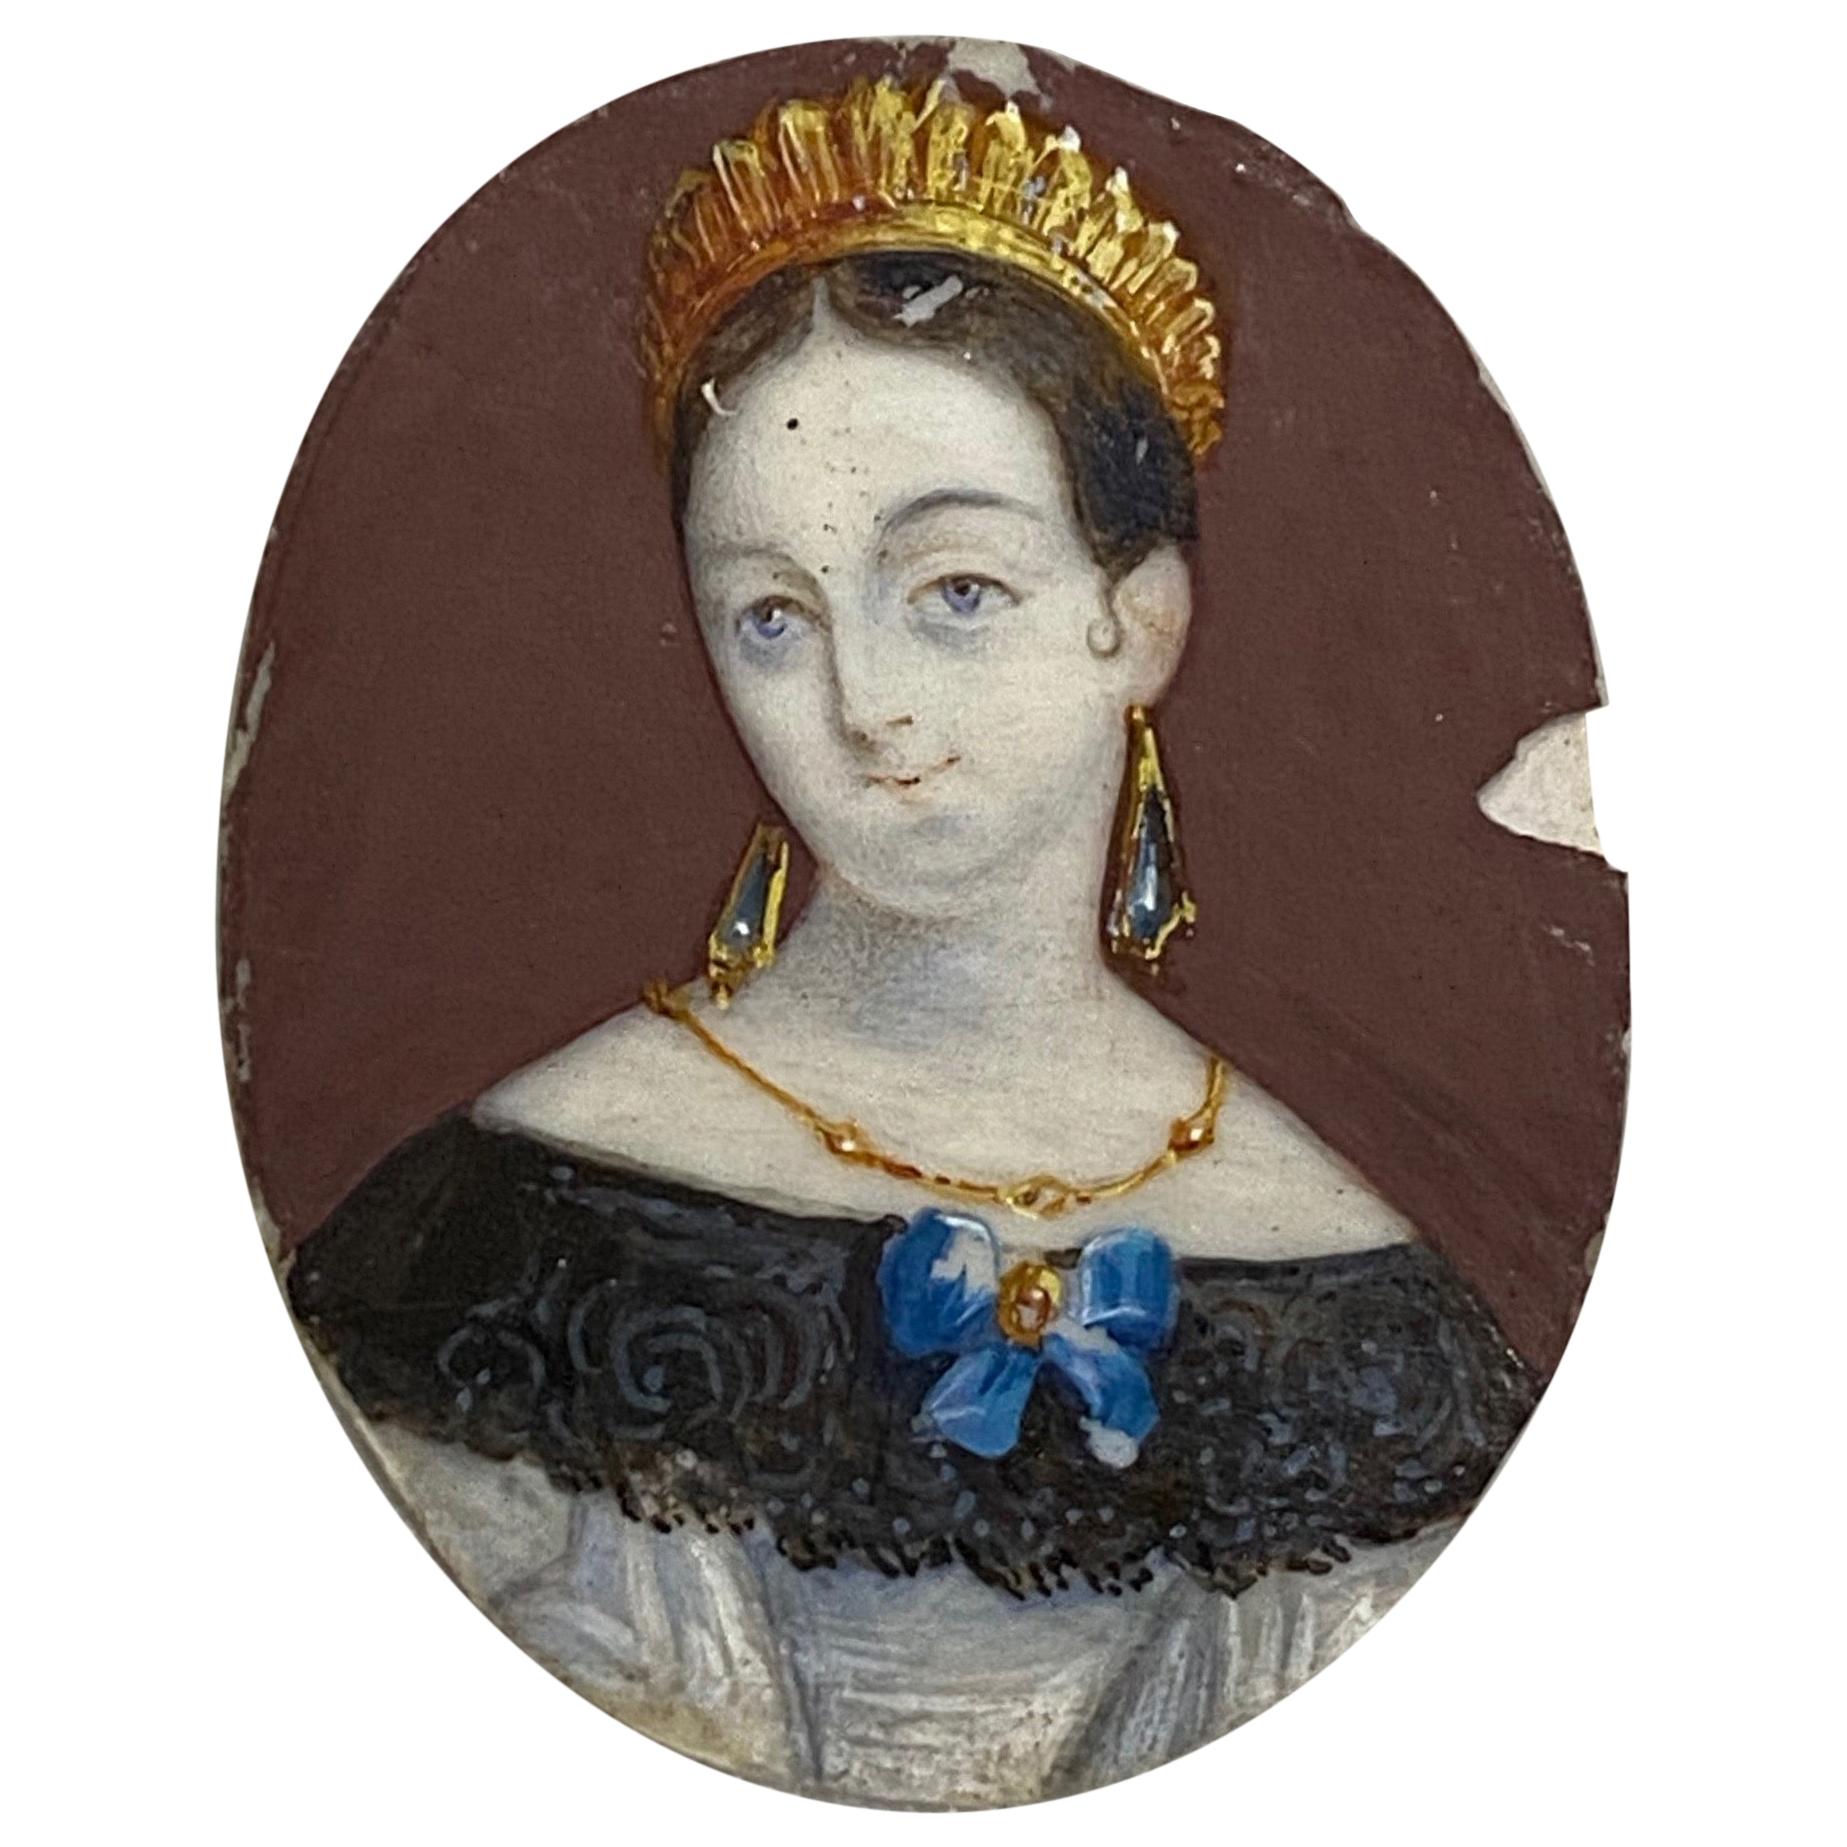 Russian Princess with Tiara and Elaborate Jewelry Portrait Miniature